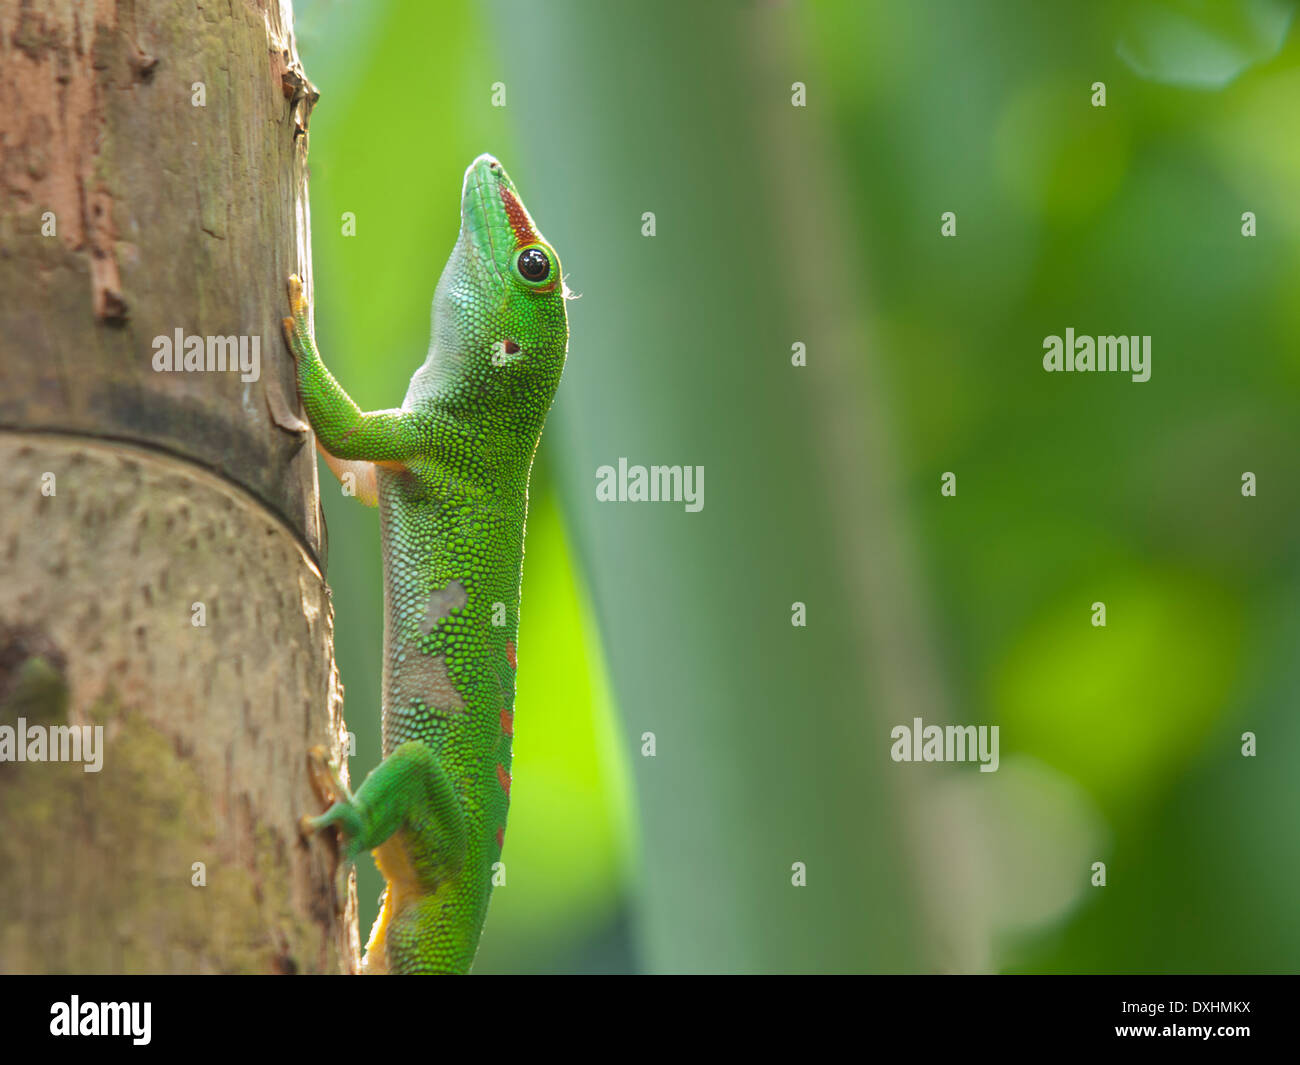 Green Madagascar Day Gecko (Phelsuma madagascariensis) Stock Photo